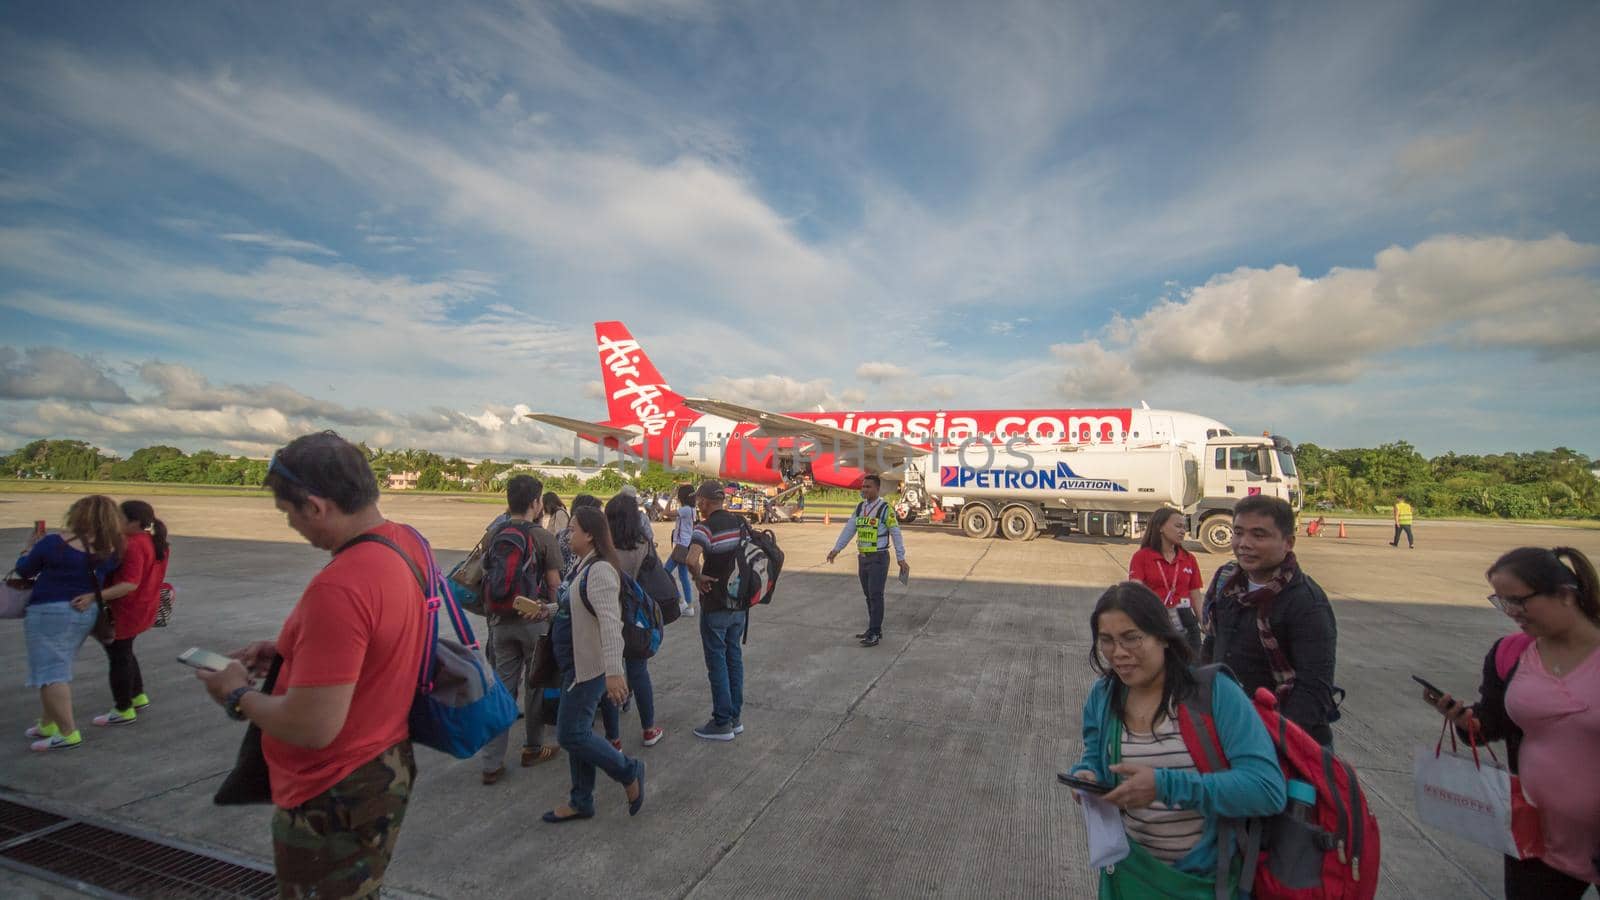 Tagbilaran, Phllipines - February 1, 2018: Loading Luggage into the plane at the airport of Tagbilaran